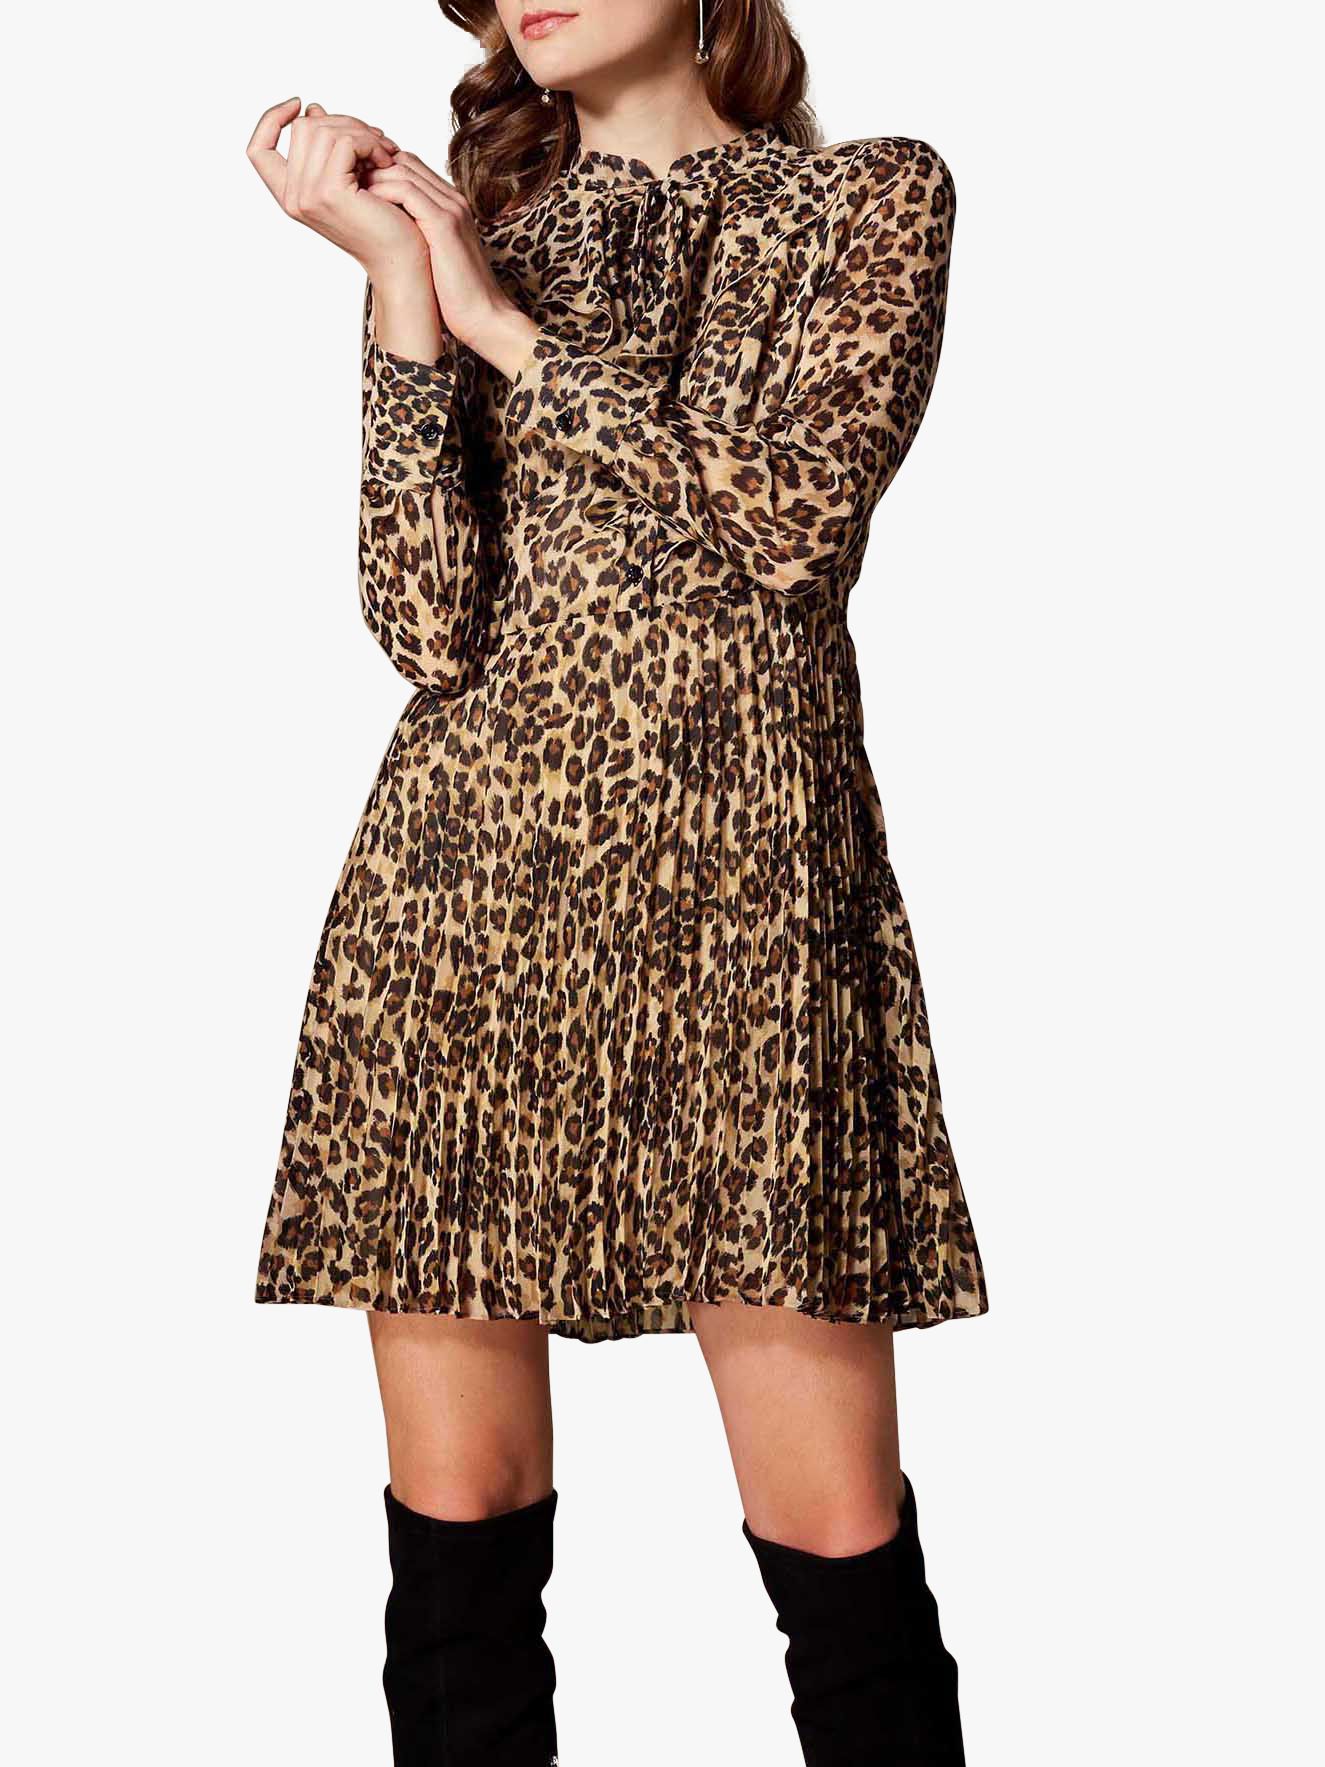 karen millen leopard dress